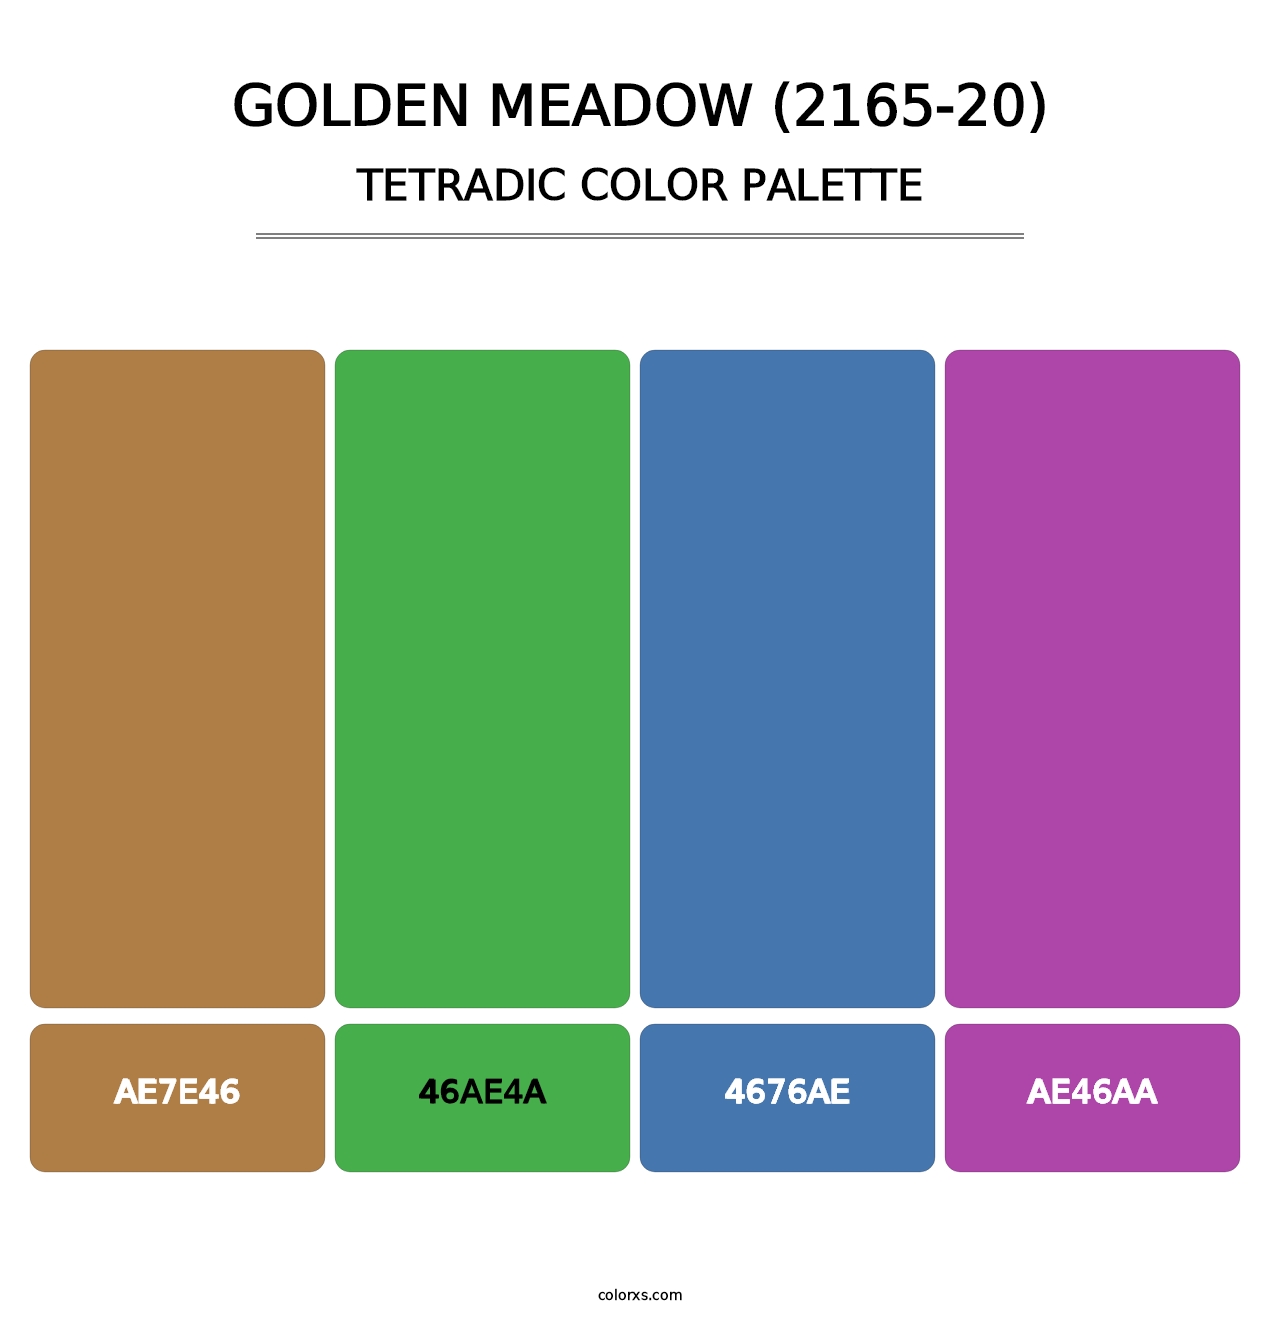 Golden Meadow (2165-20) - Tetradic Color Palette